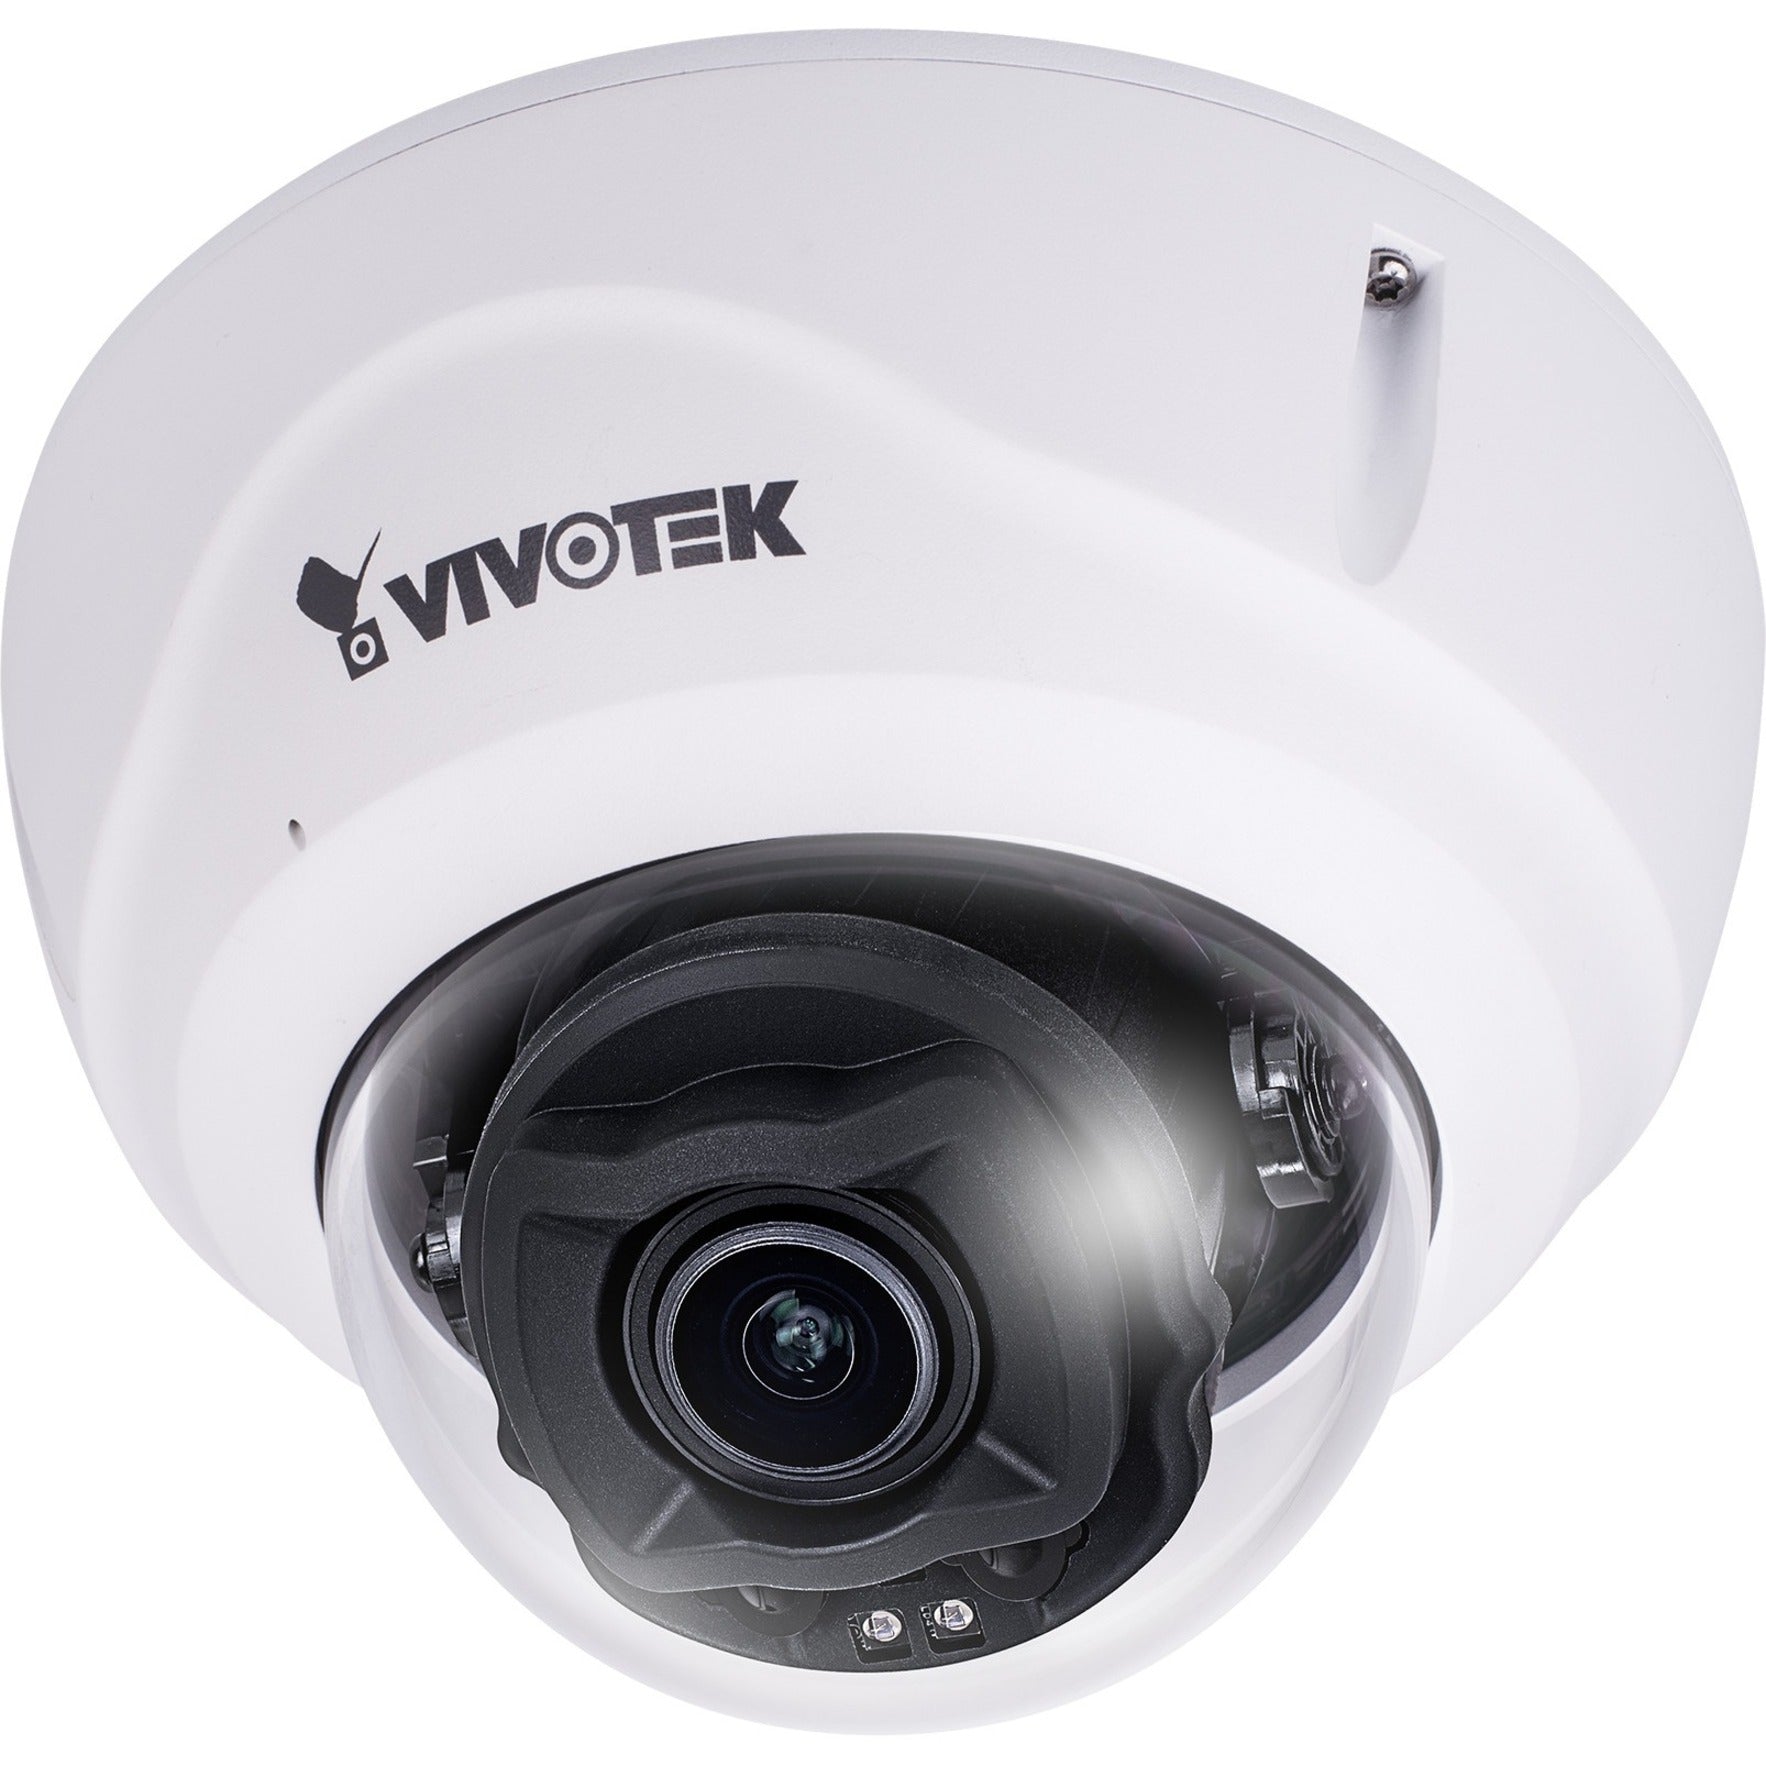 Vivotek FD9387-HTV-A Fixed Dome Network Camera, 5MP, 50M IR, H.265, WDR Pro, PIR, IoT Security